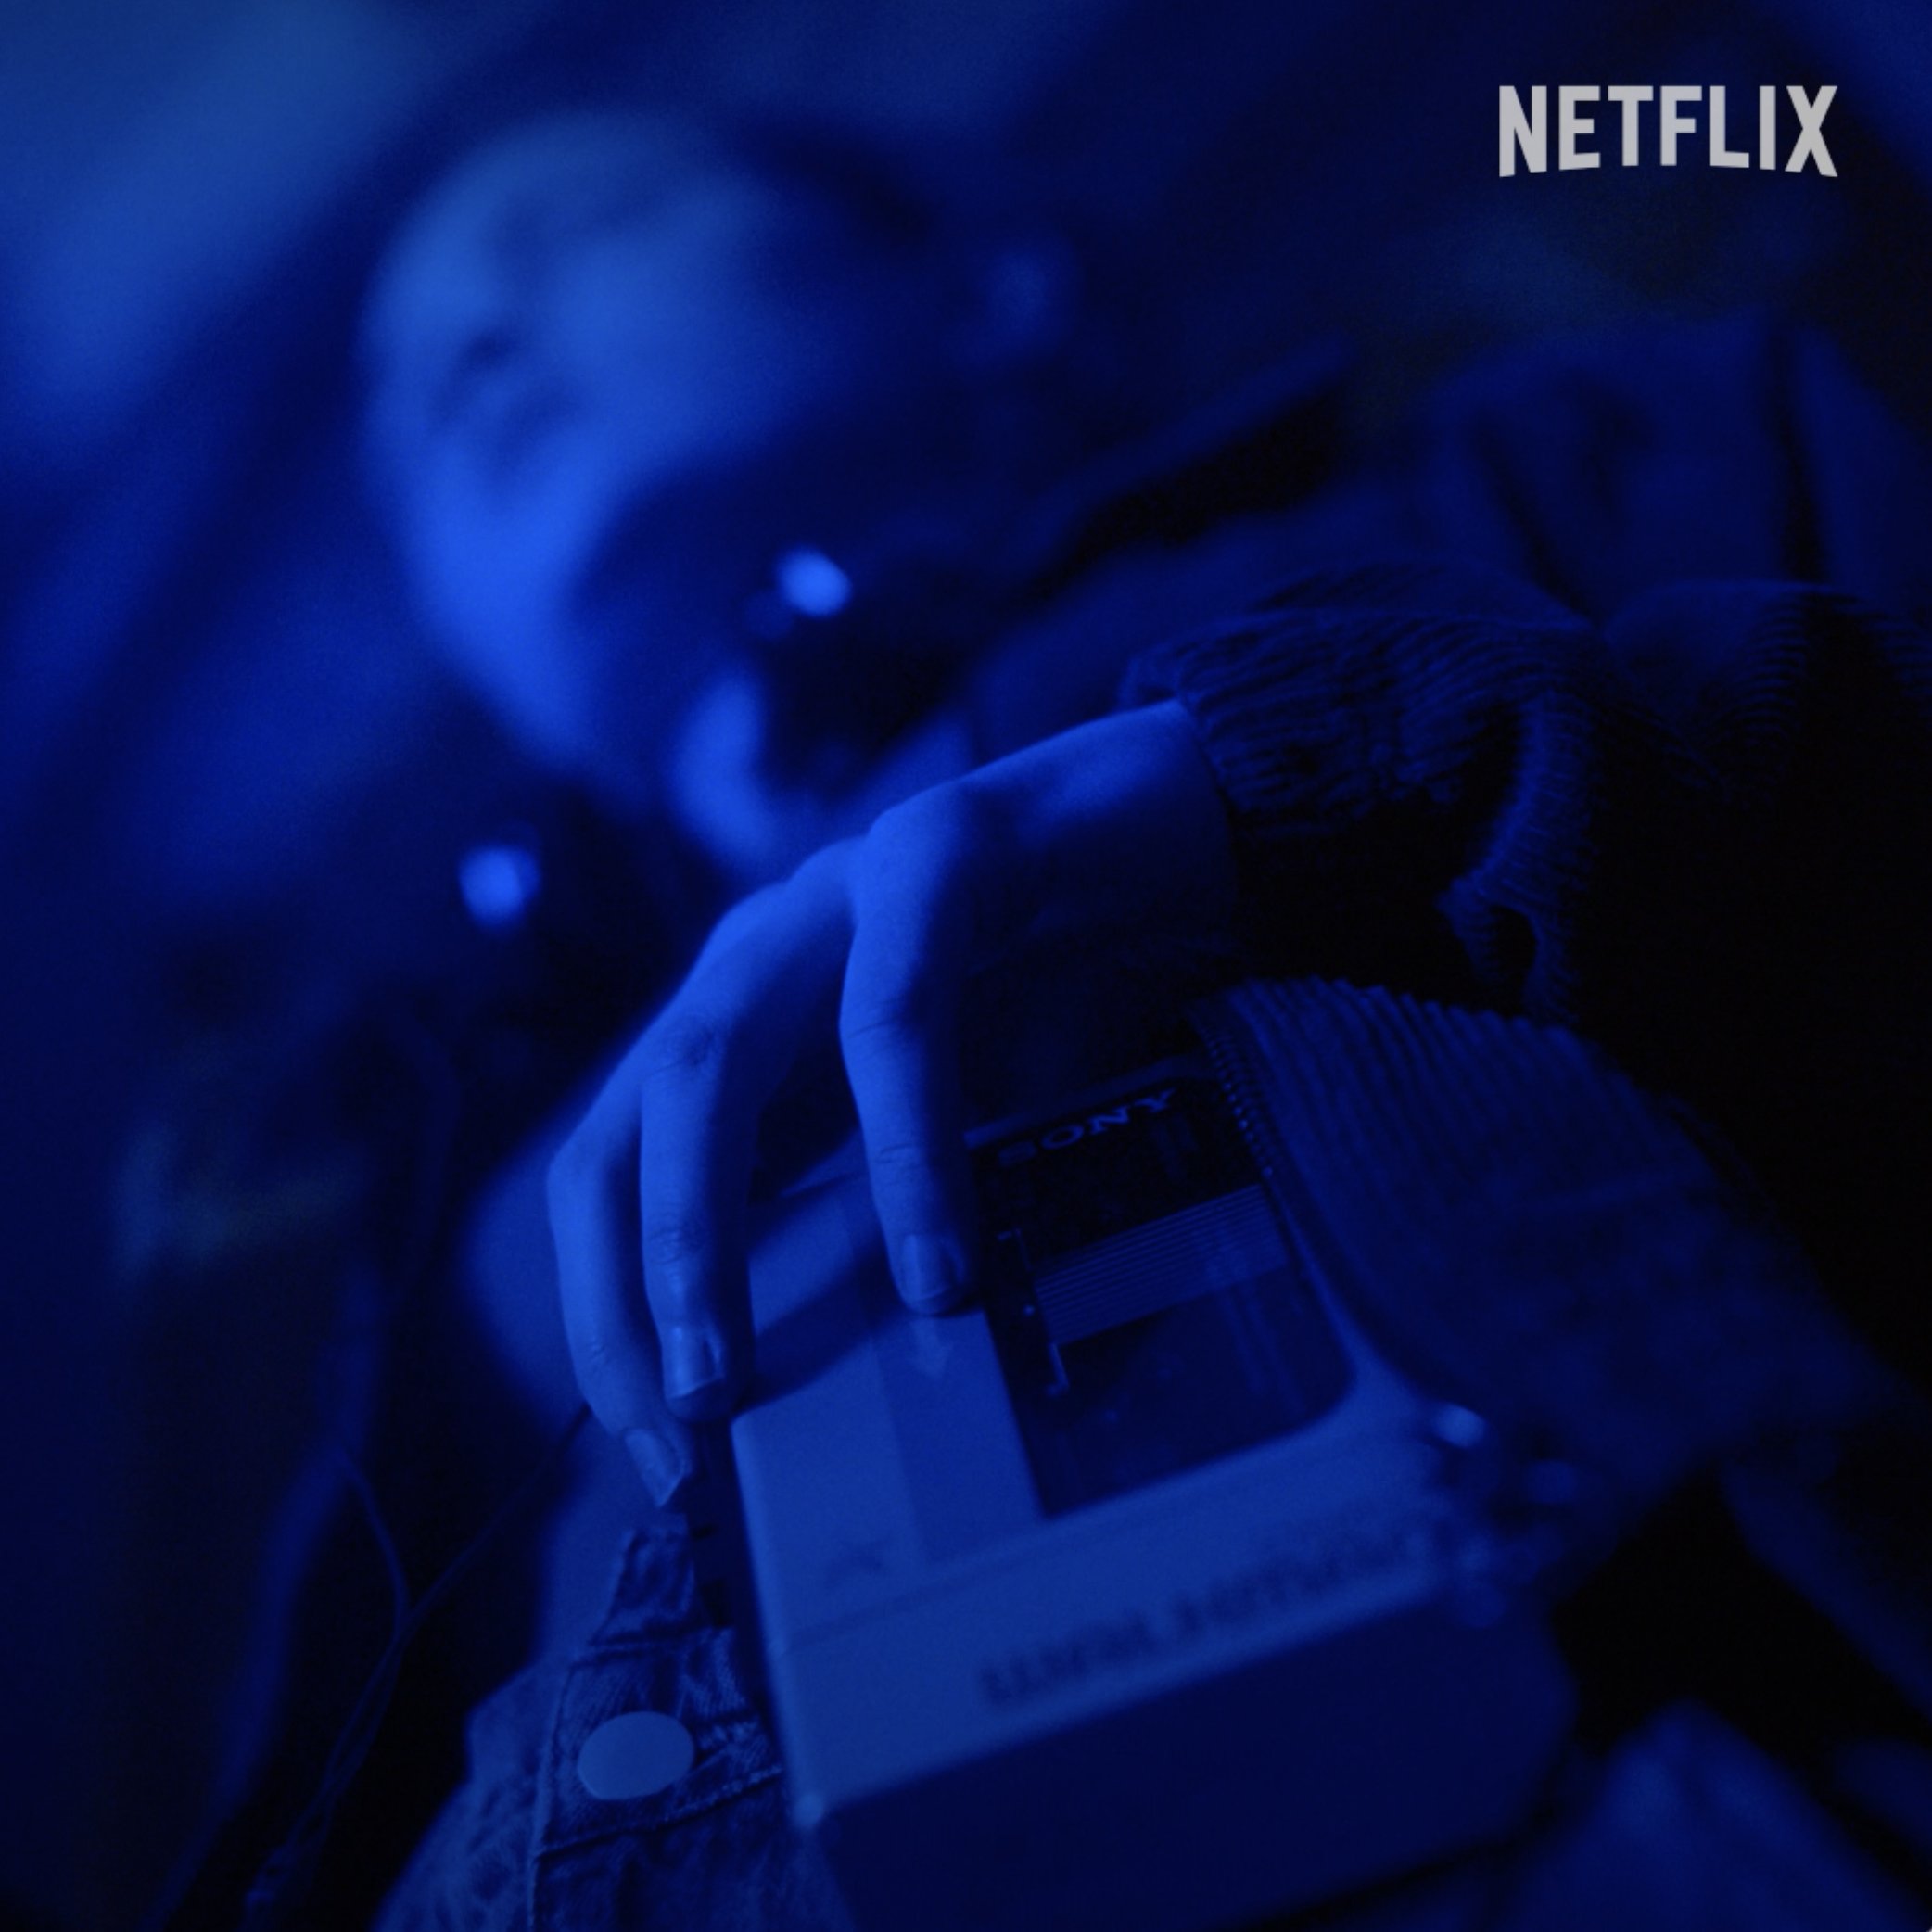 Stranger Things Season 4 Volume 2: Netflix Releases First Look Photos